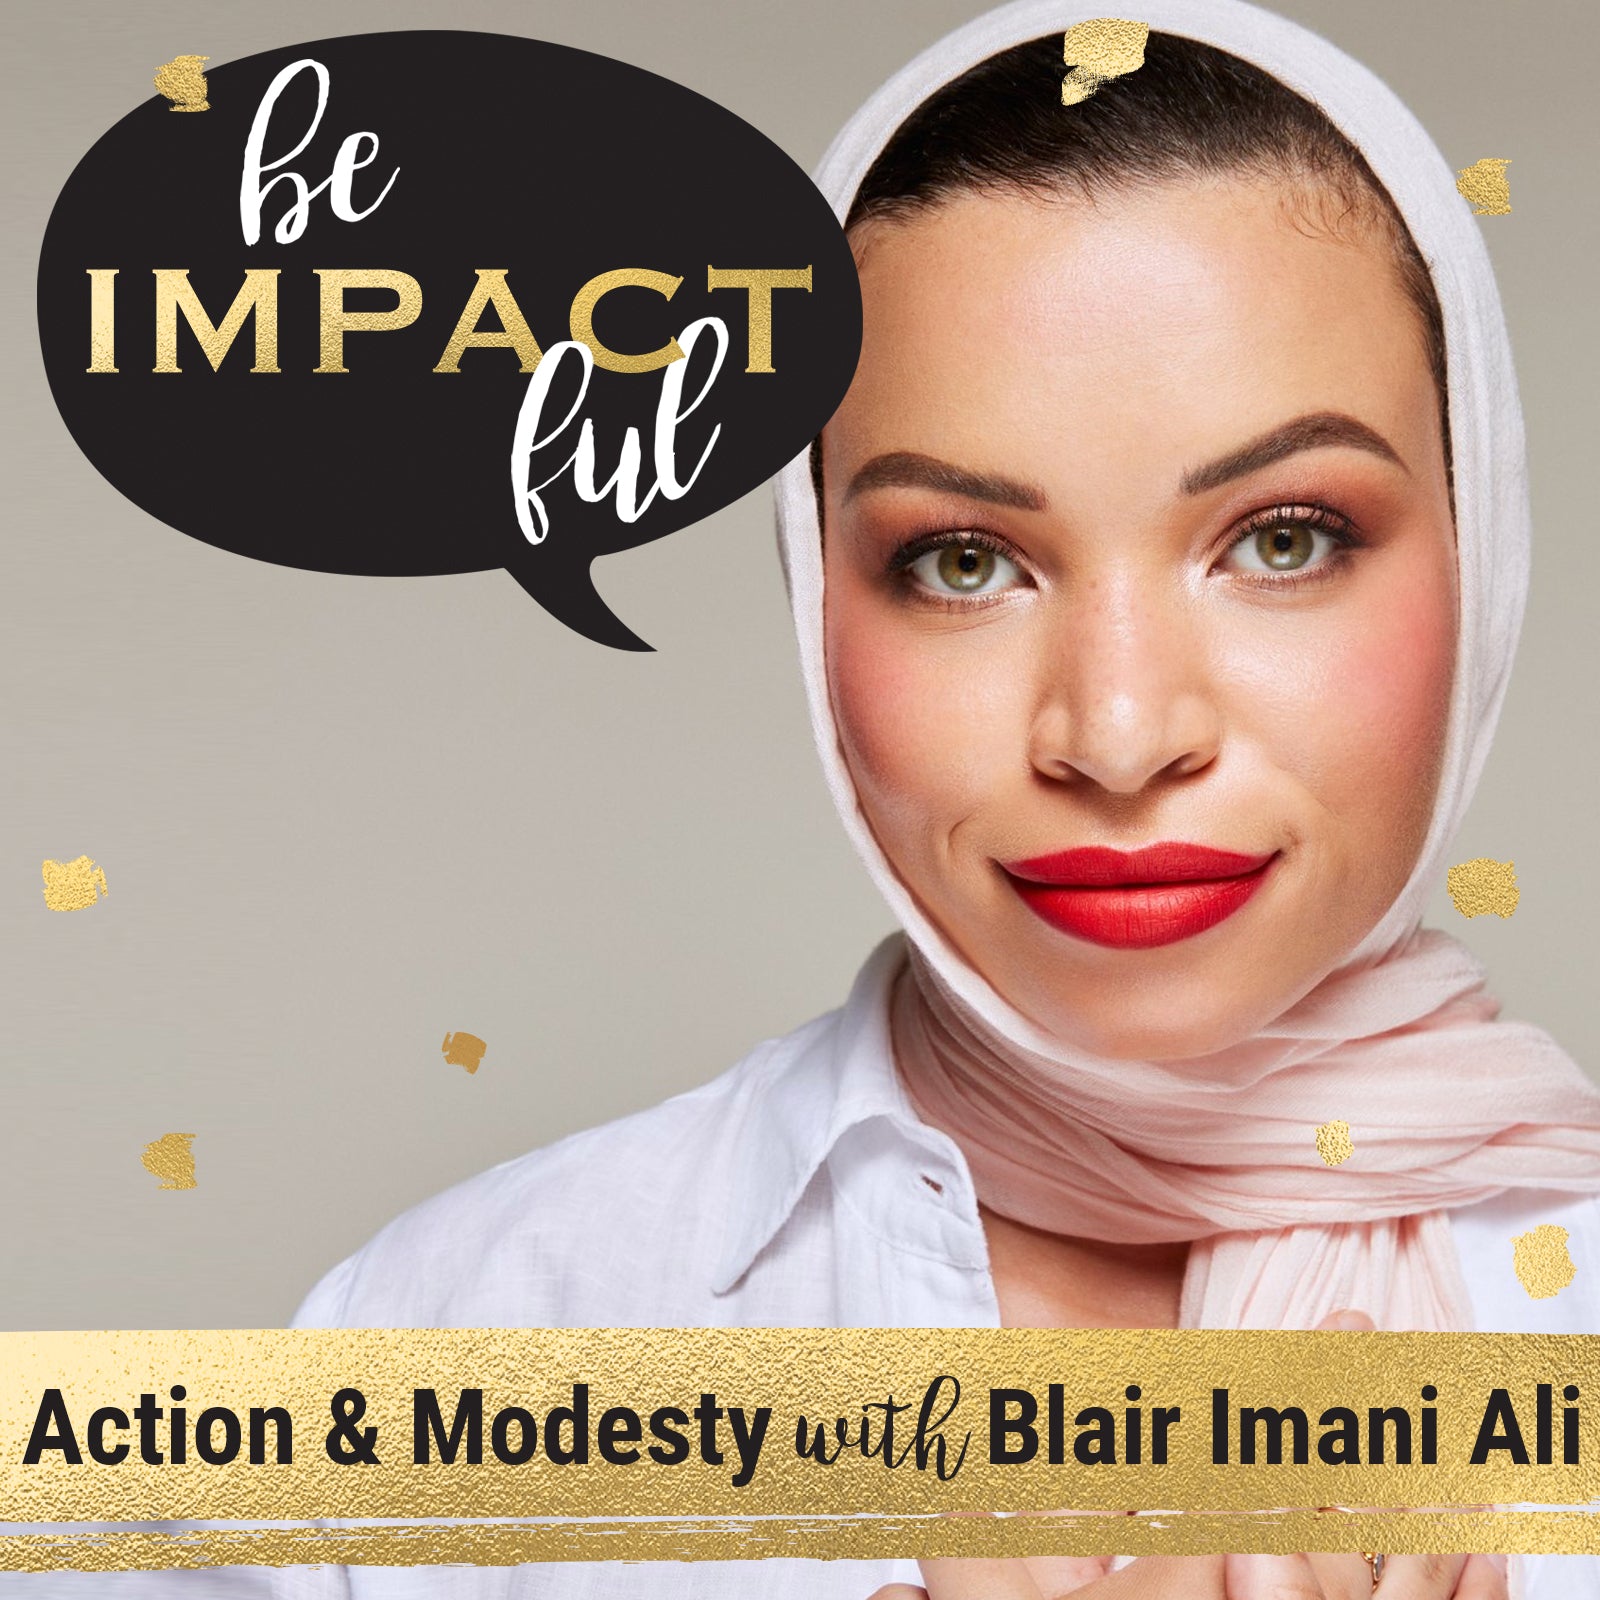 Action & Modesty with Blair Imani Ali